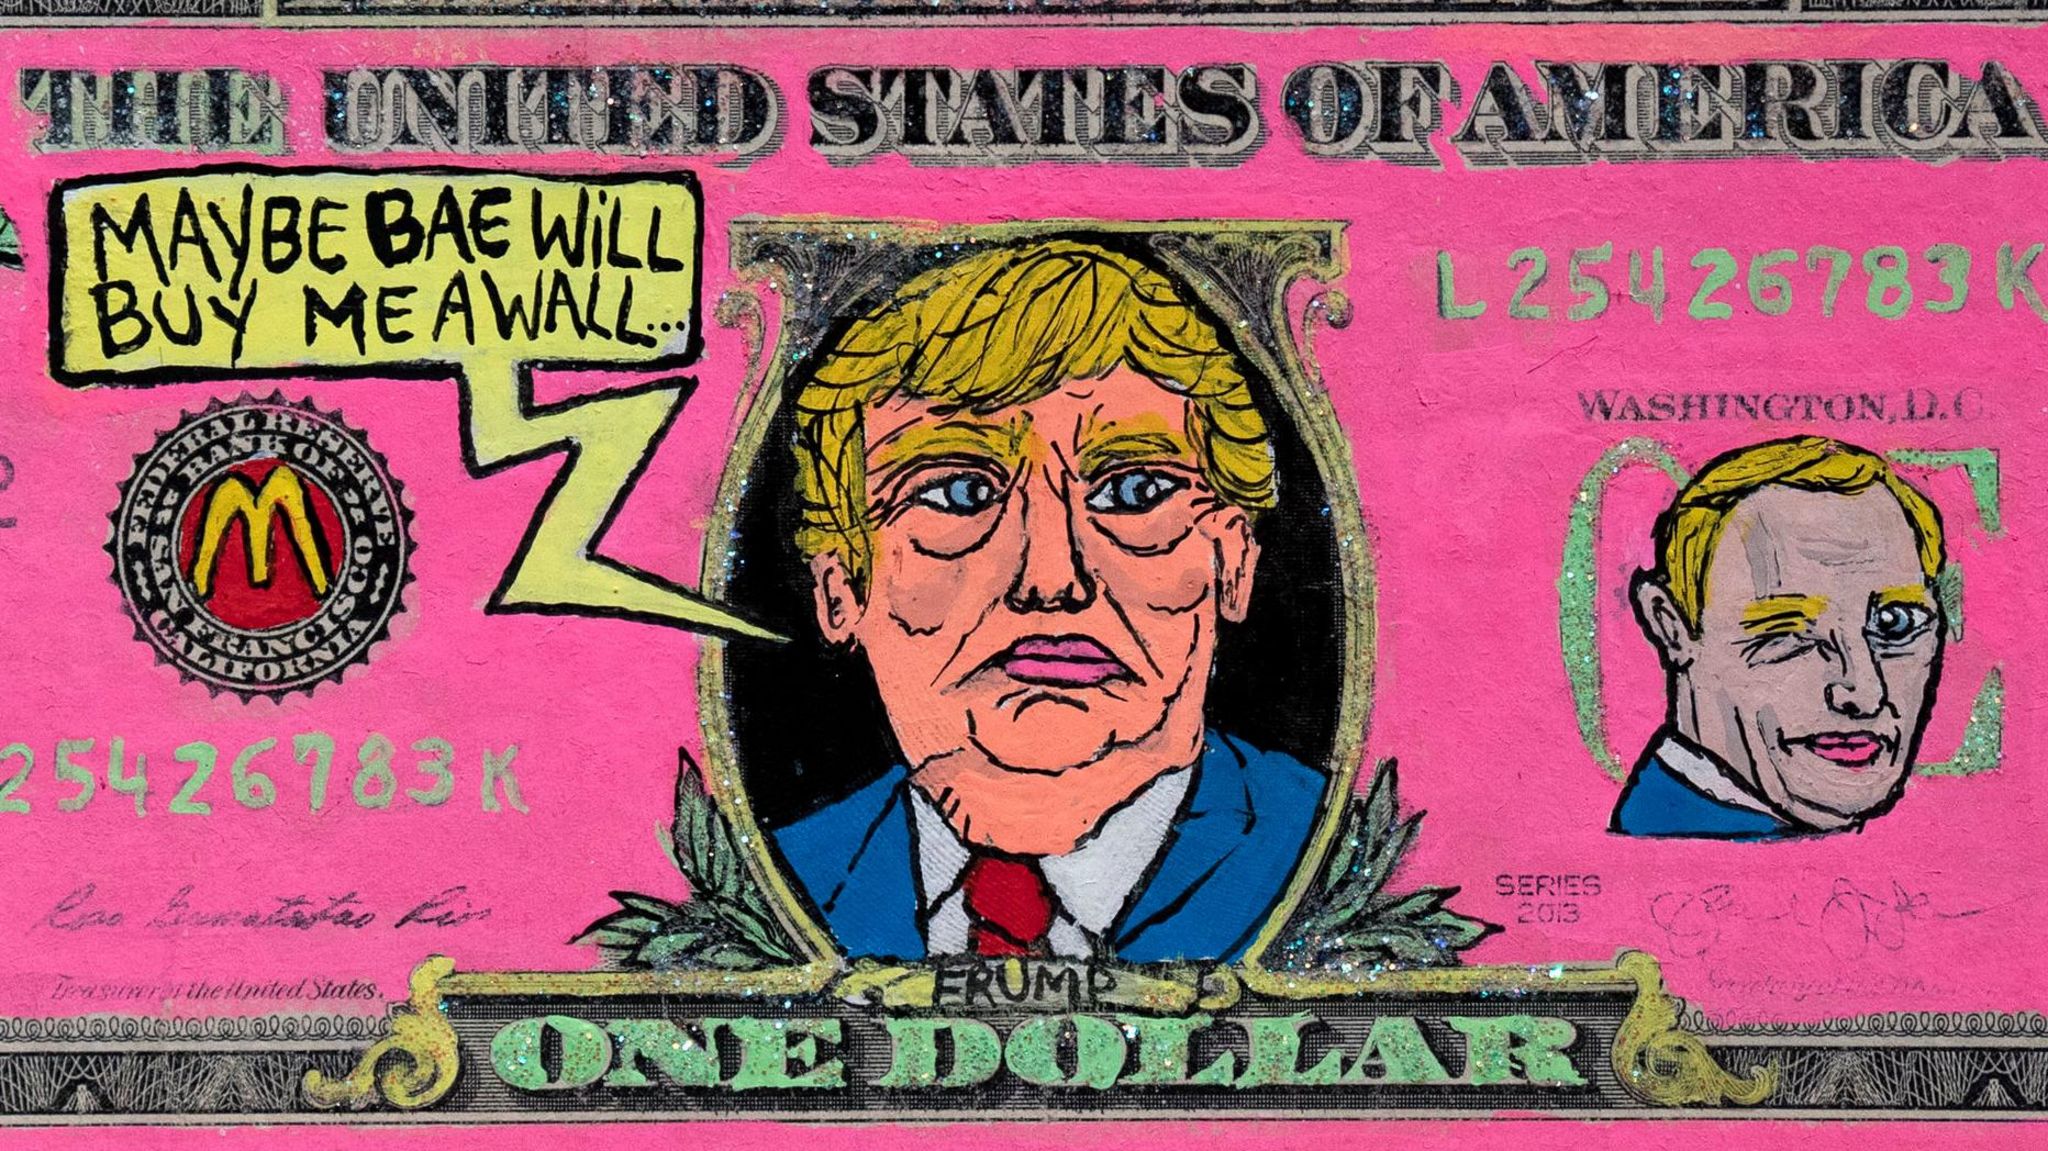 Dollar bill artwork by Sean Kushner